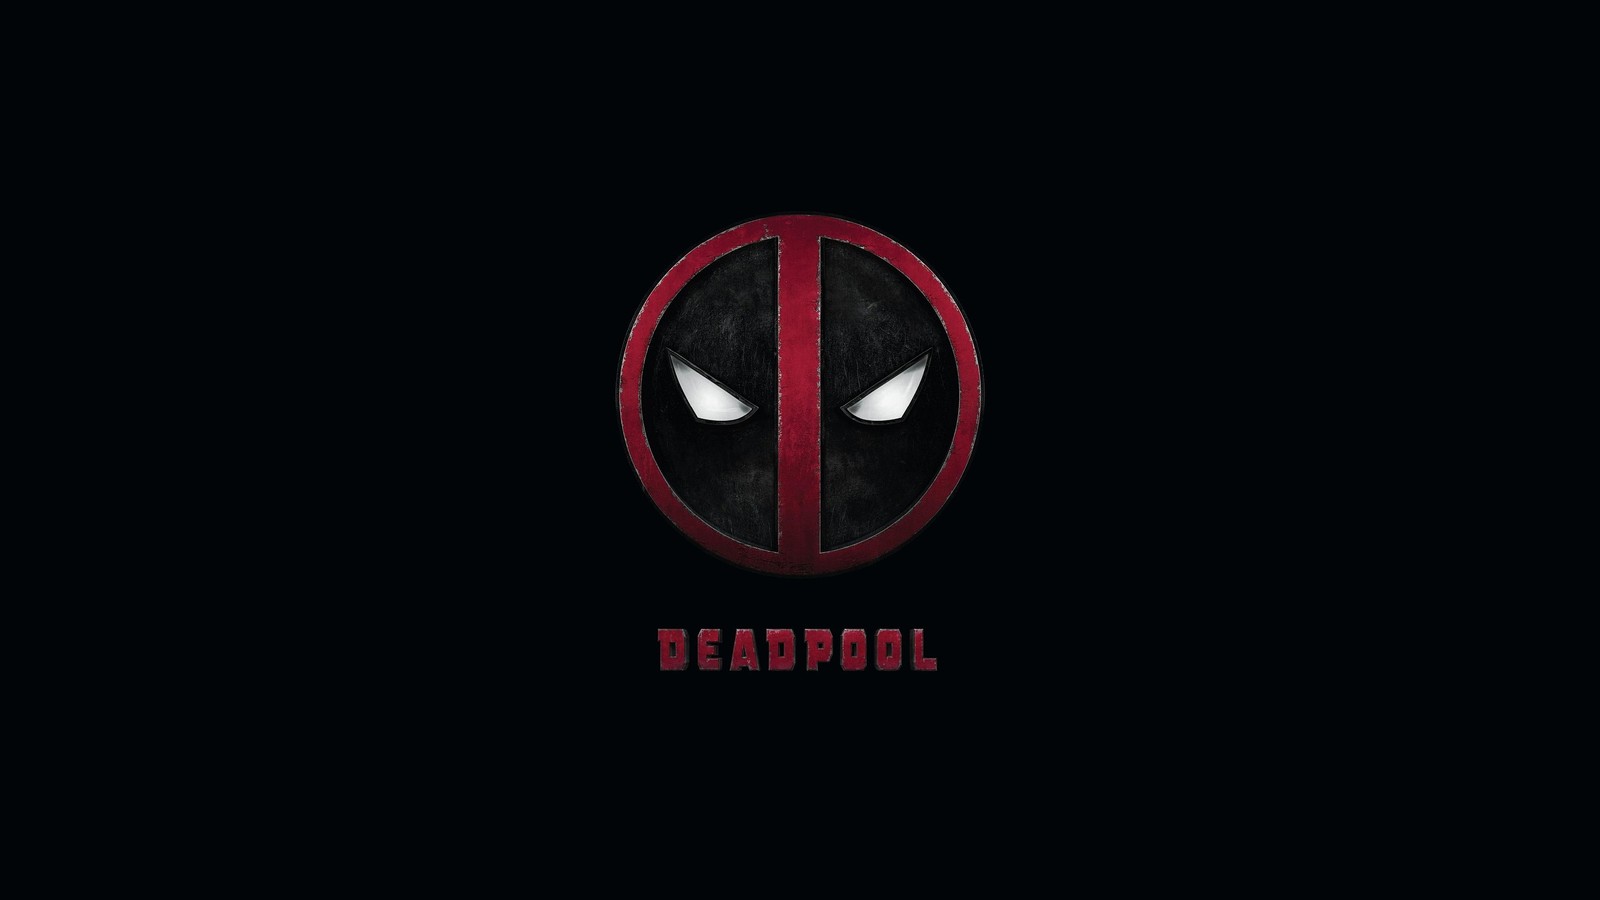 Deadpool logo 4k movie wallpaper 2016 3840x2160